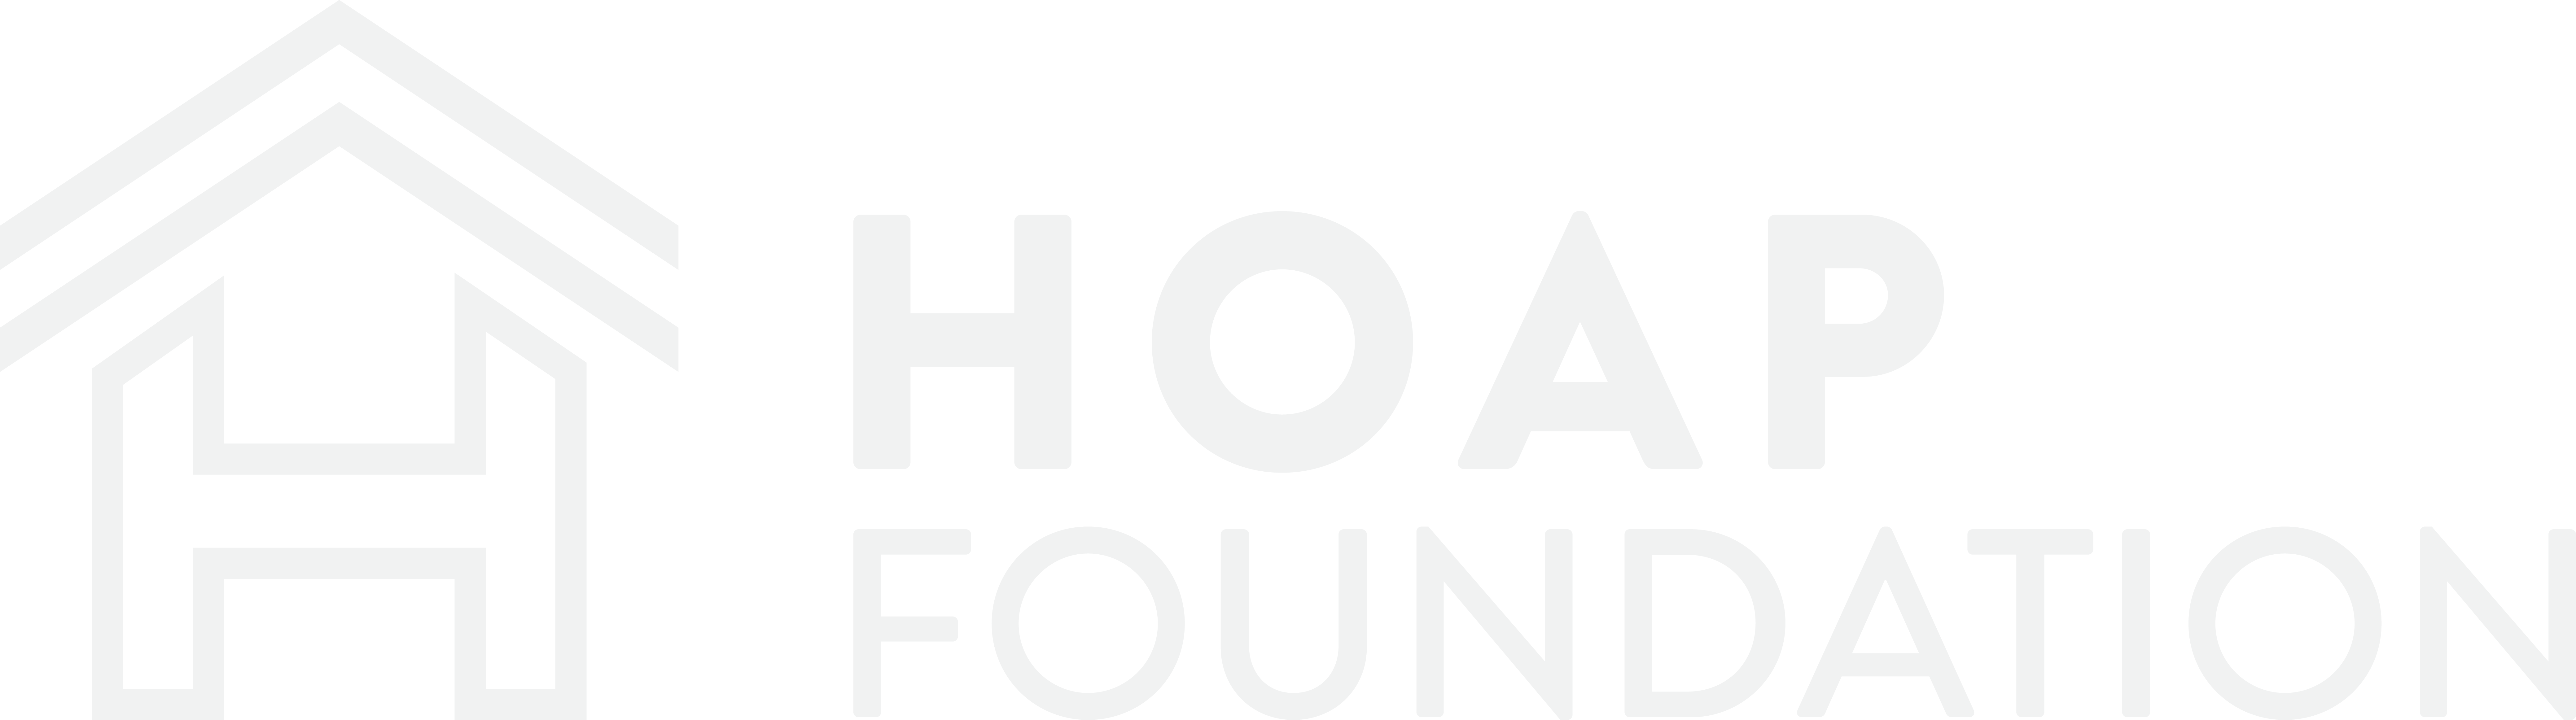 HOAP Foundation logo